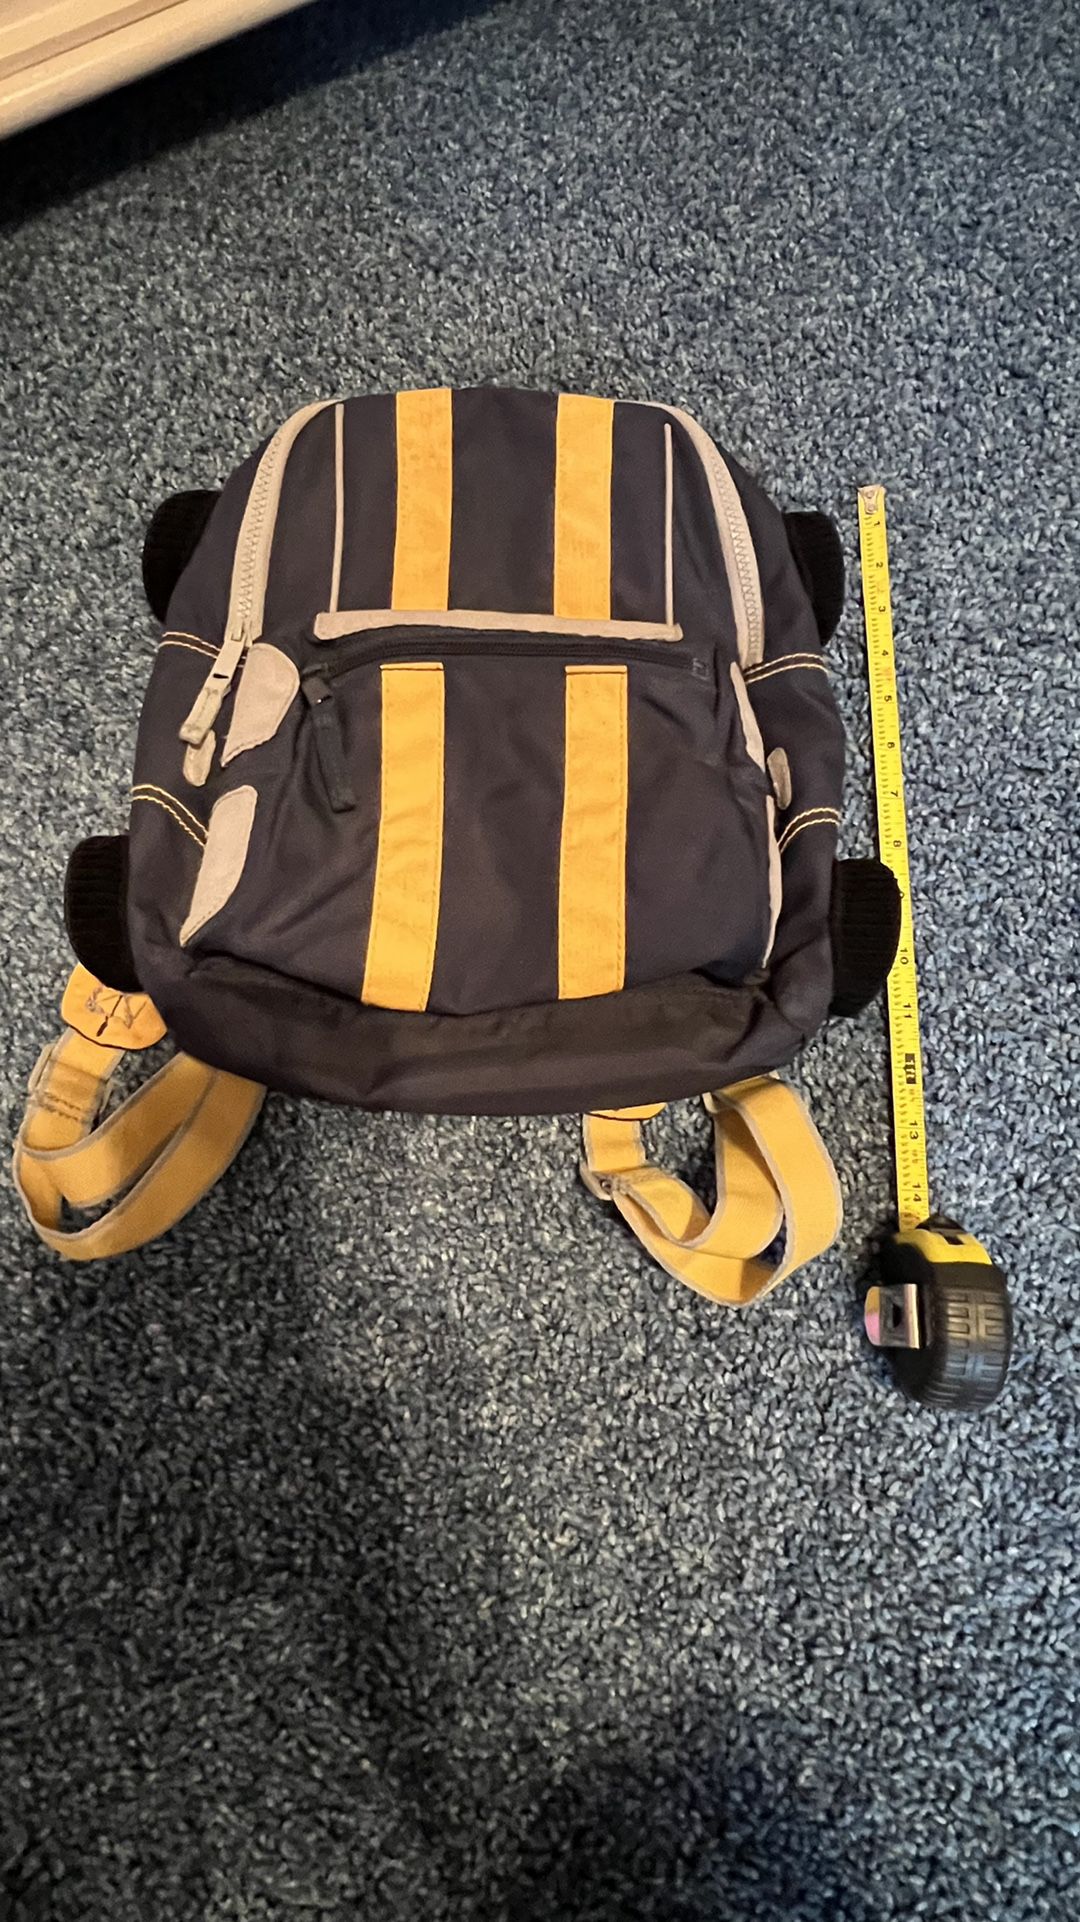 Toddler race car backpack